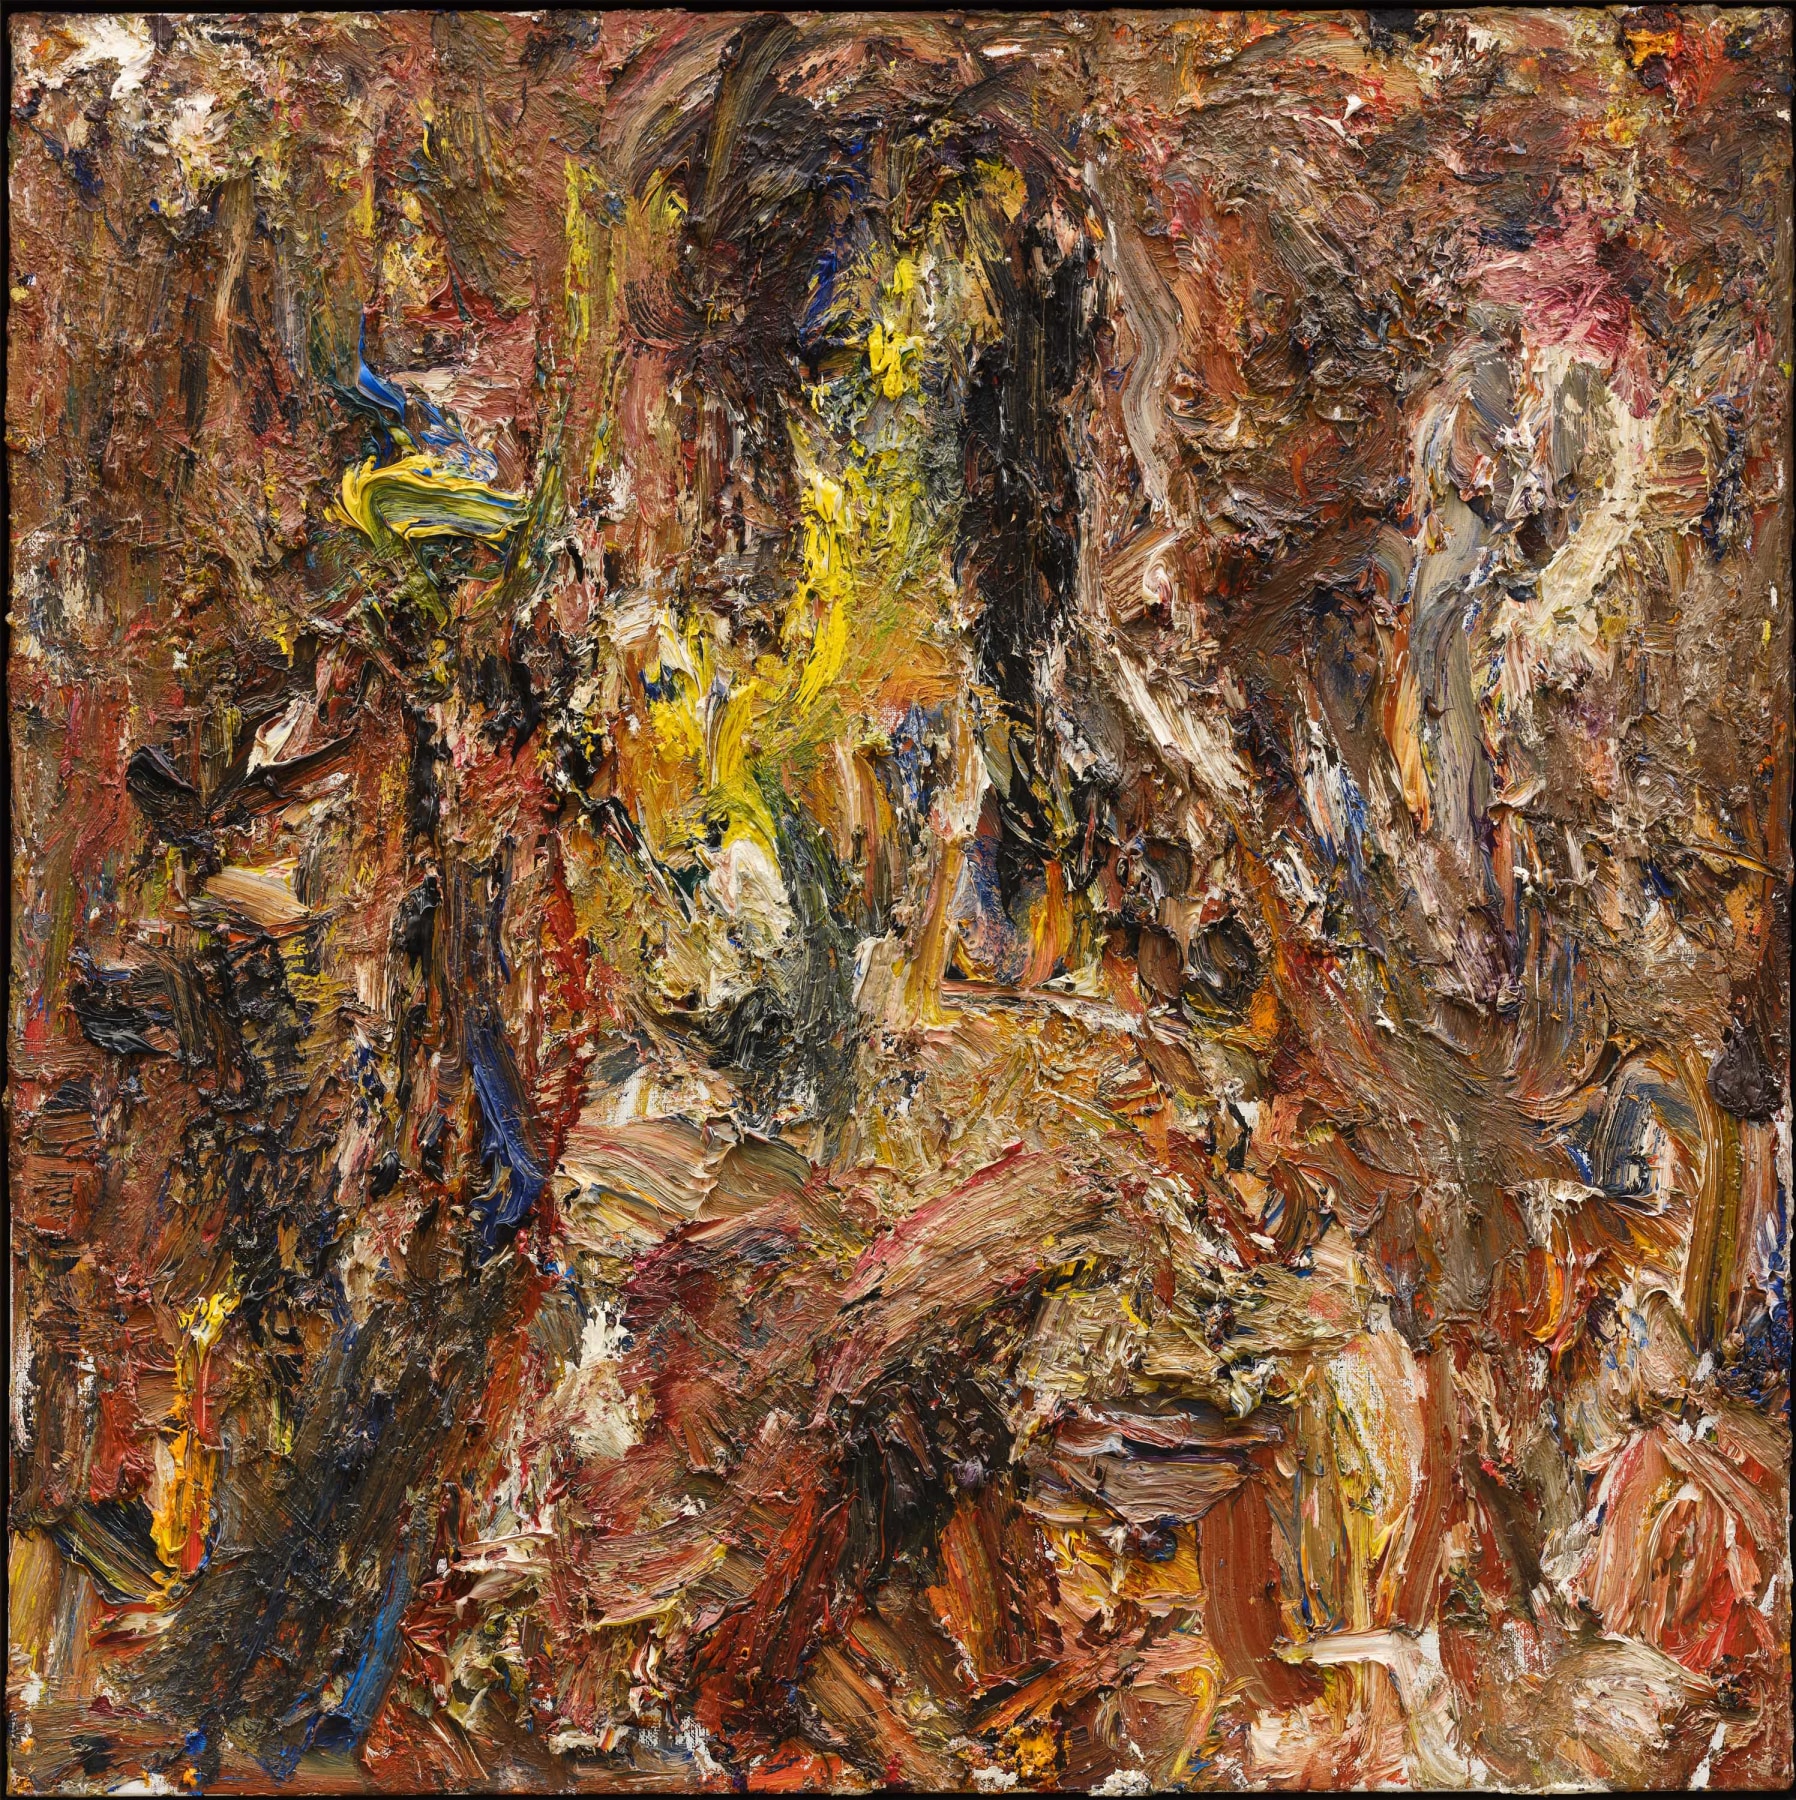 Eug&amp;egrave;ne Leroy

&amp;ldquo;Elle avec M.&amp;rdquo;, 1997

Oil on canvas

39 1/4 x 39 1/4 inches

100 x 100 cm

LER 413